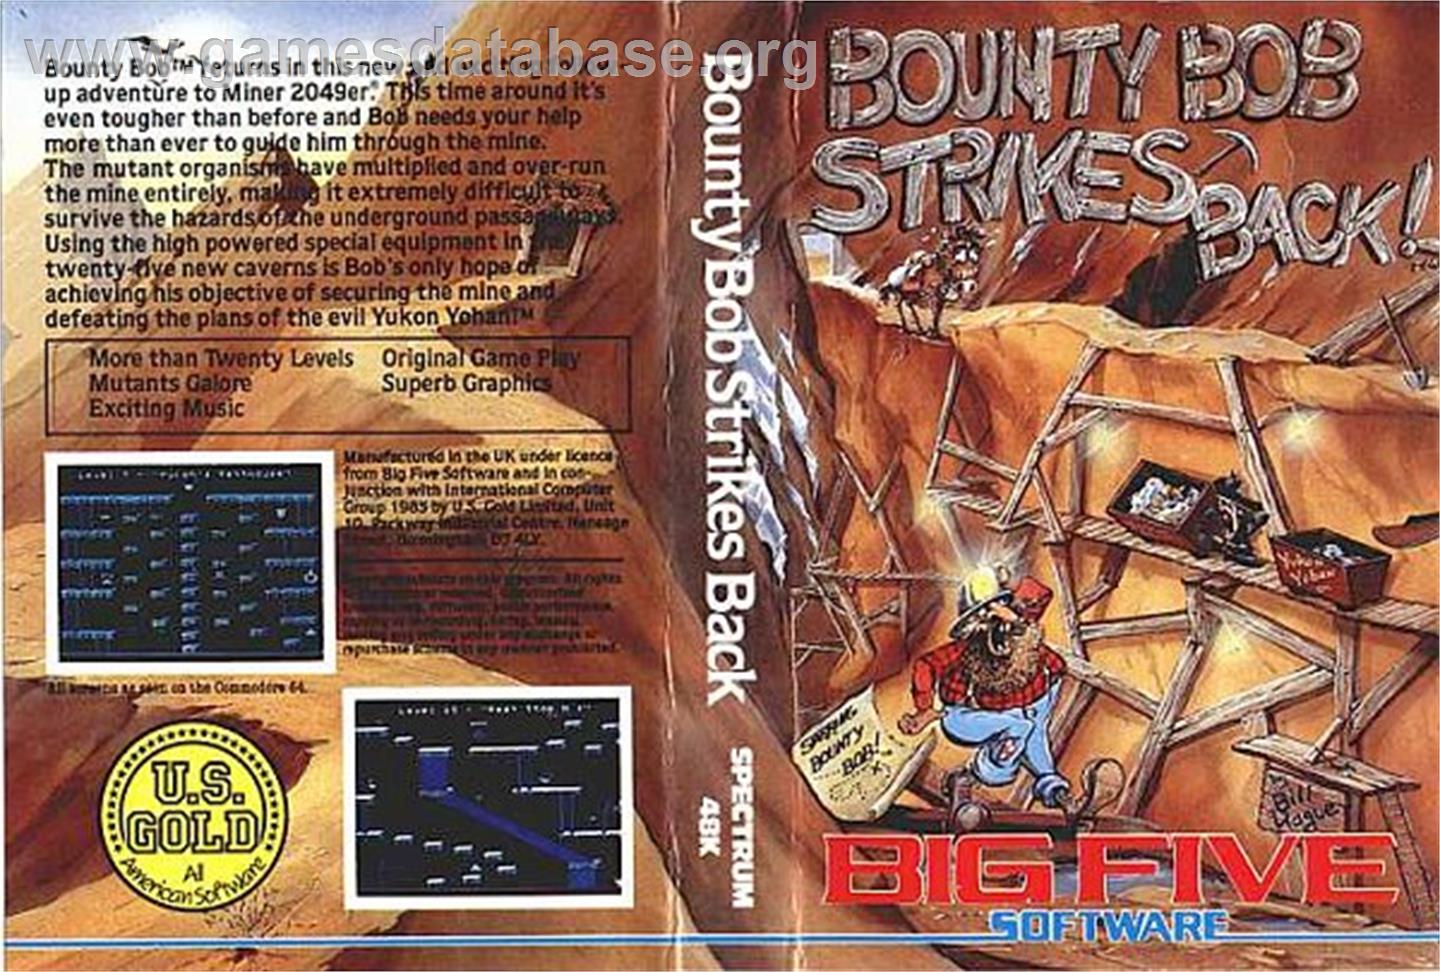 Bounty Bob Strikes Back! - Sinclair ZX Spectrum - Artwork - Box